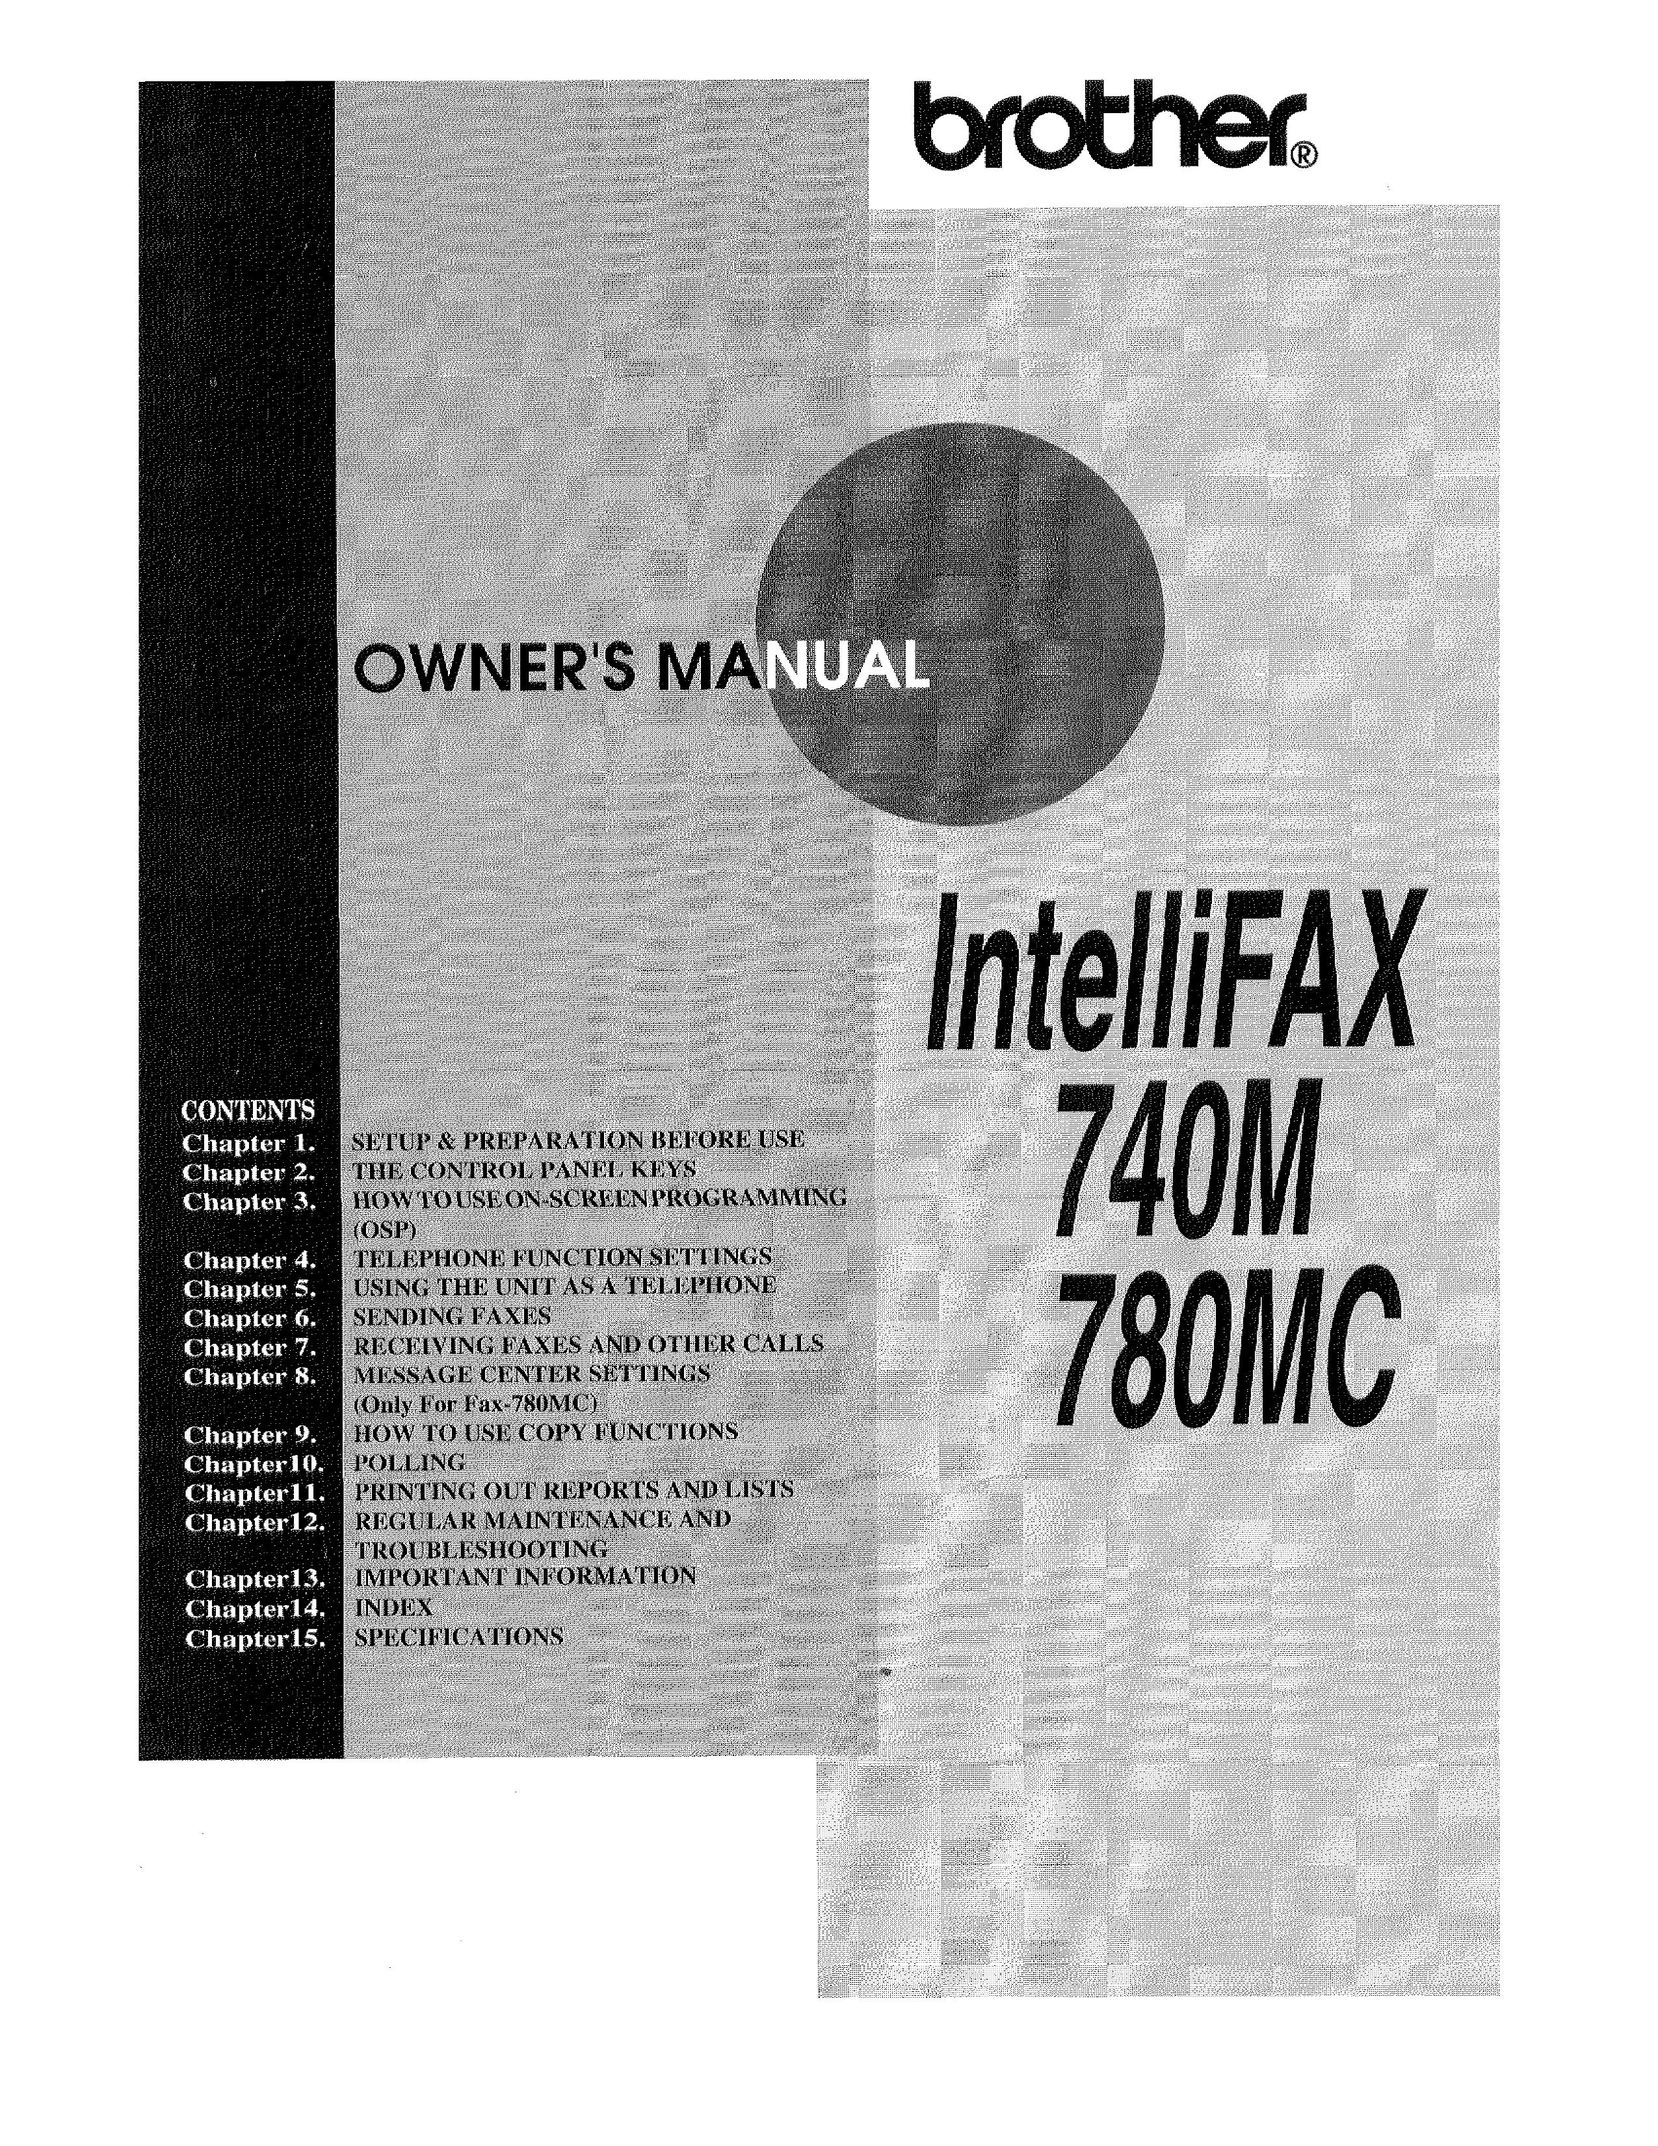 Brother 740M Fax Machine User Manual